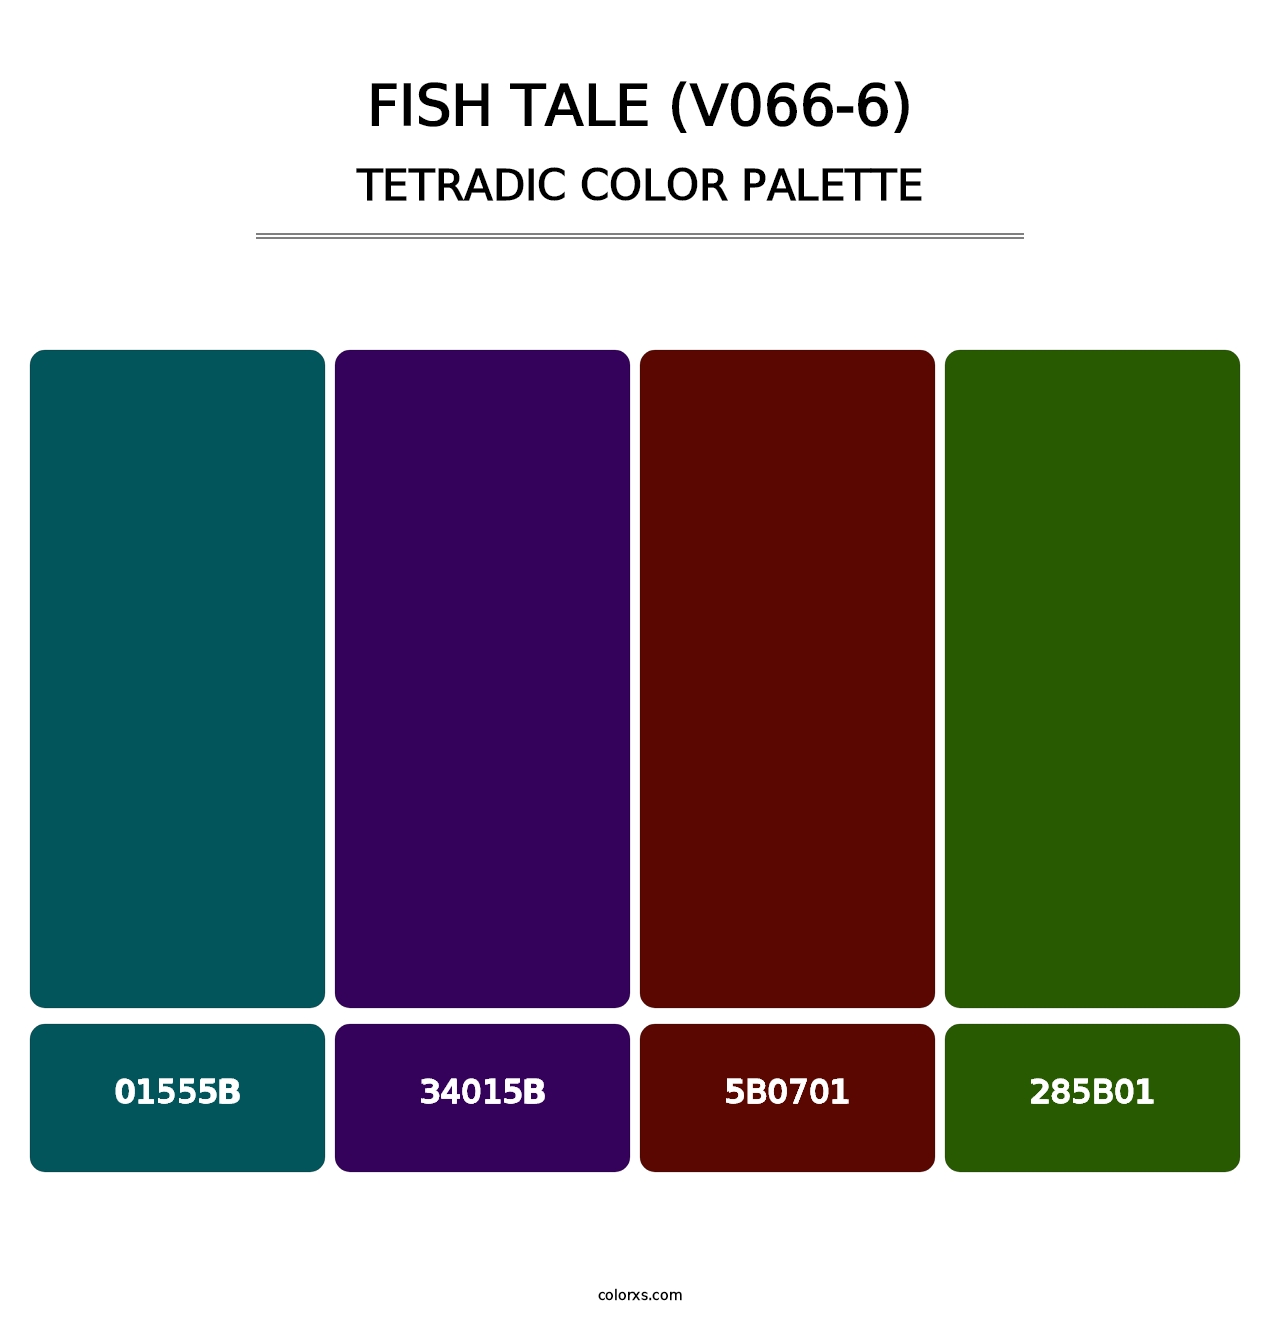 Fish Tale (V066-6) - Tetradic Color Palette